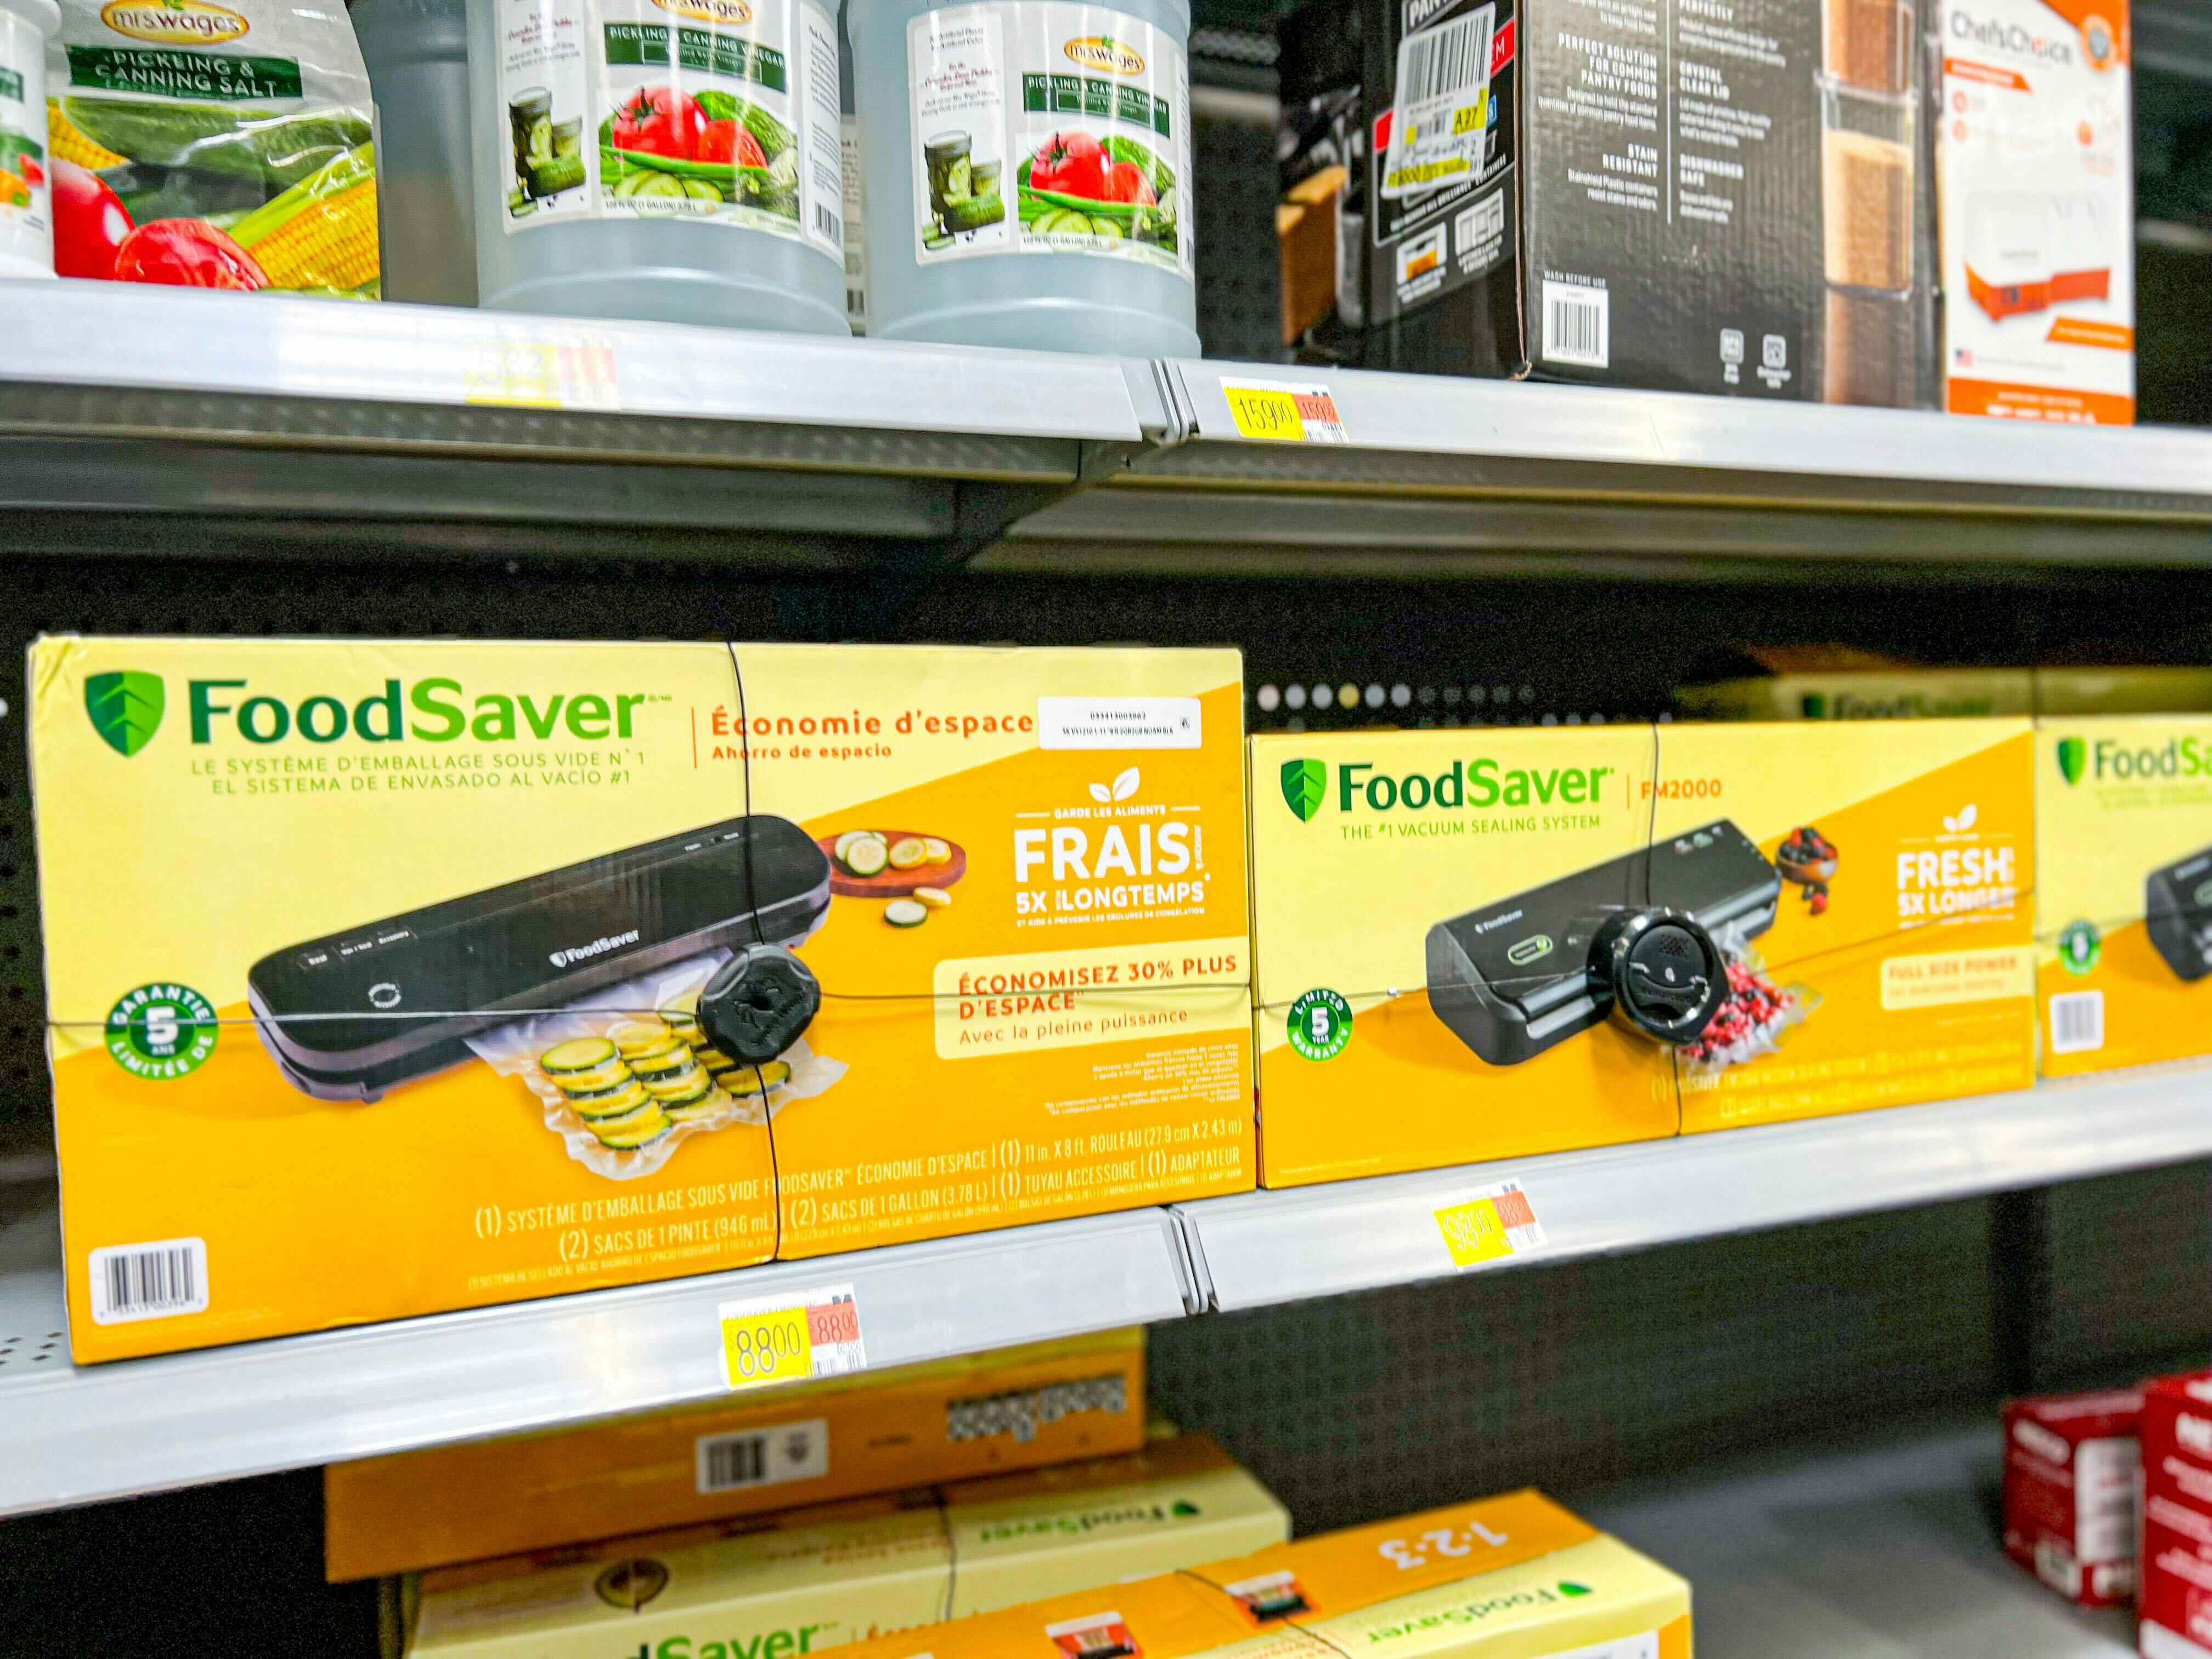 FoodSaver Vacuum Sealer on Clearance, Just $29 at Walmart